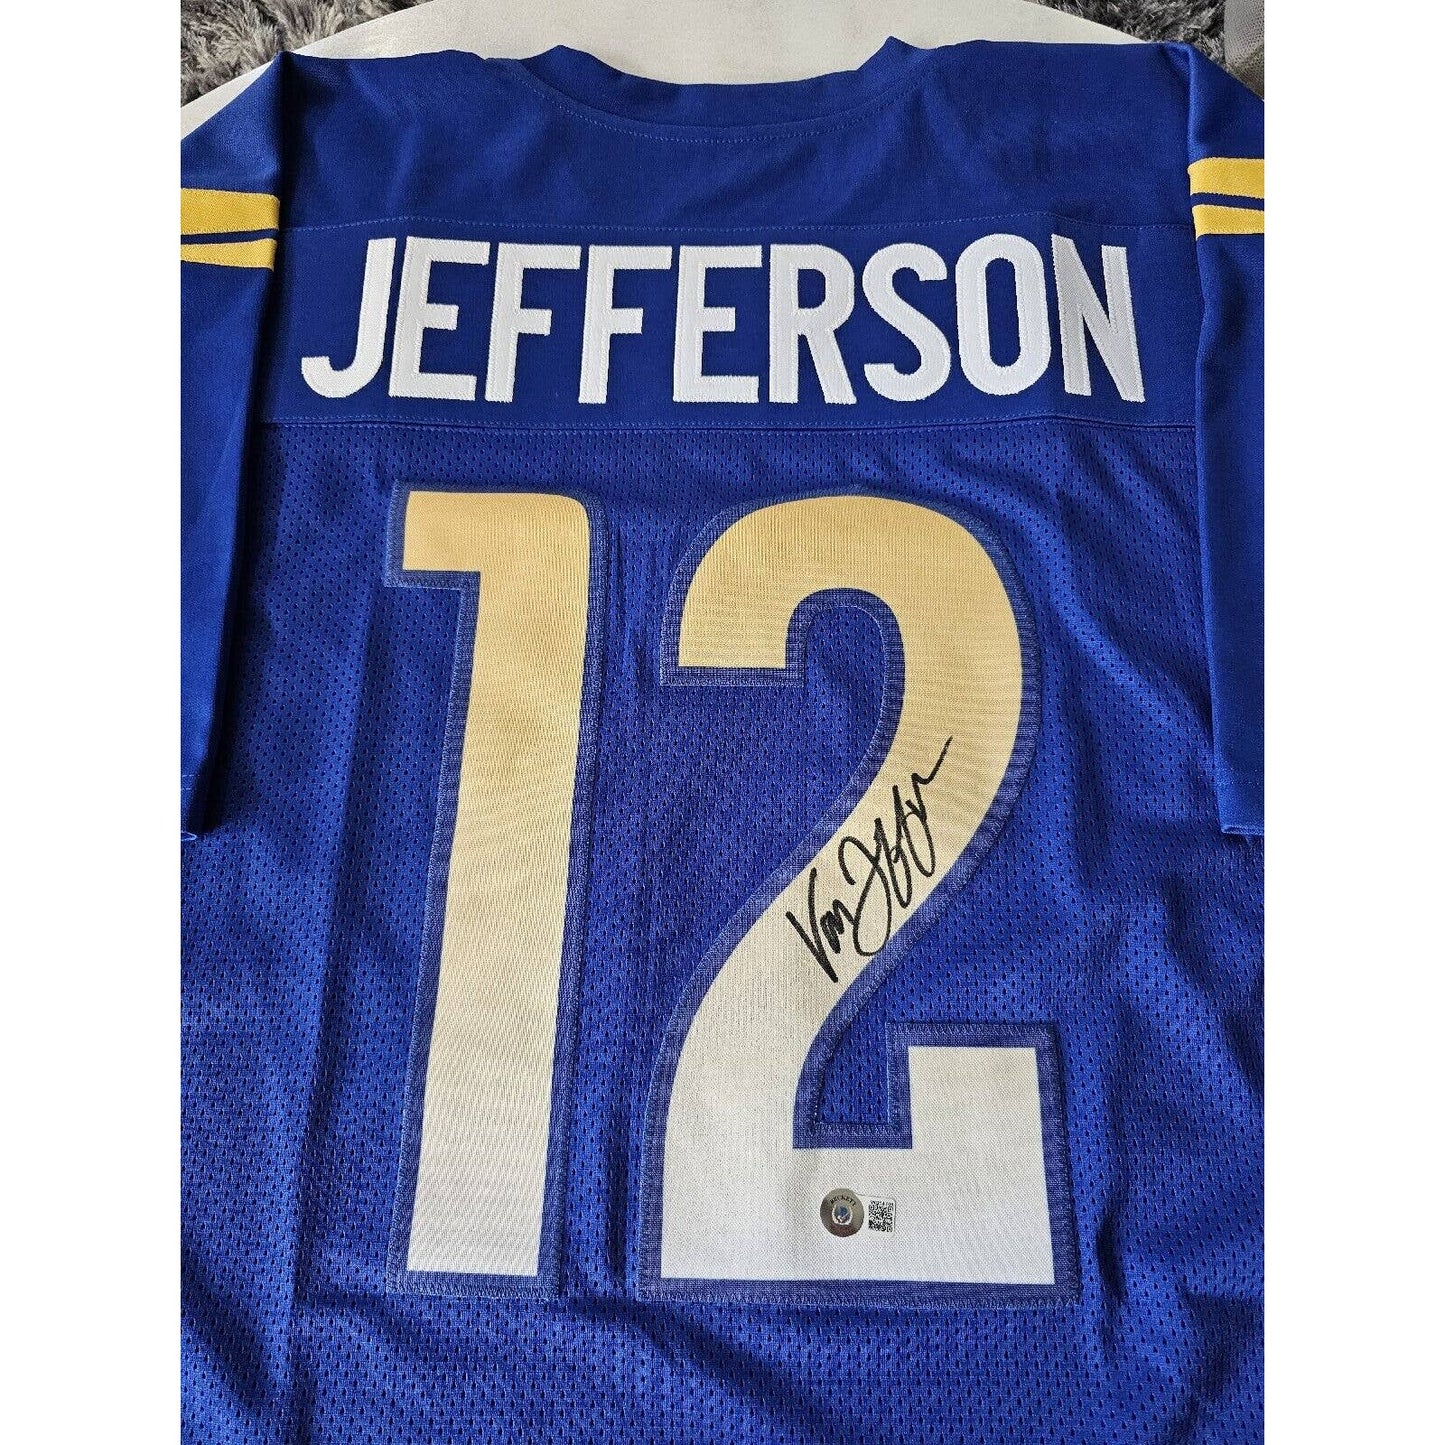 Van Jefferson Autographed/Signed Jersey Beckett Los Angeles Rams LA